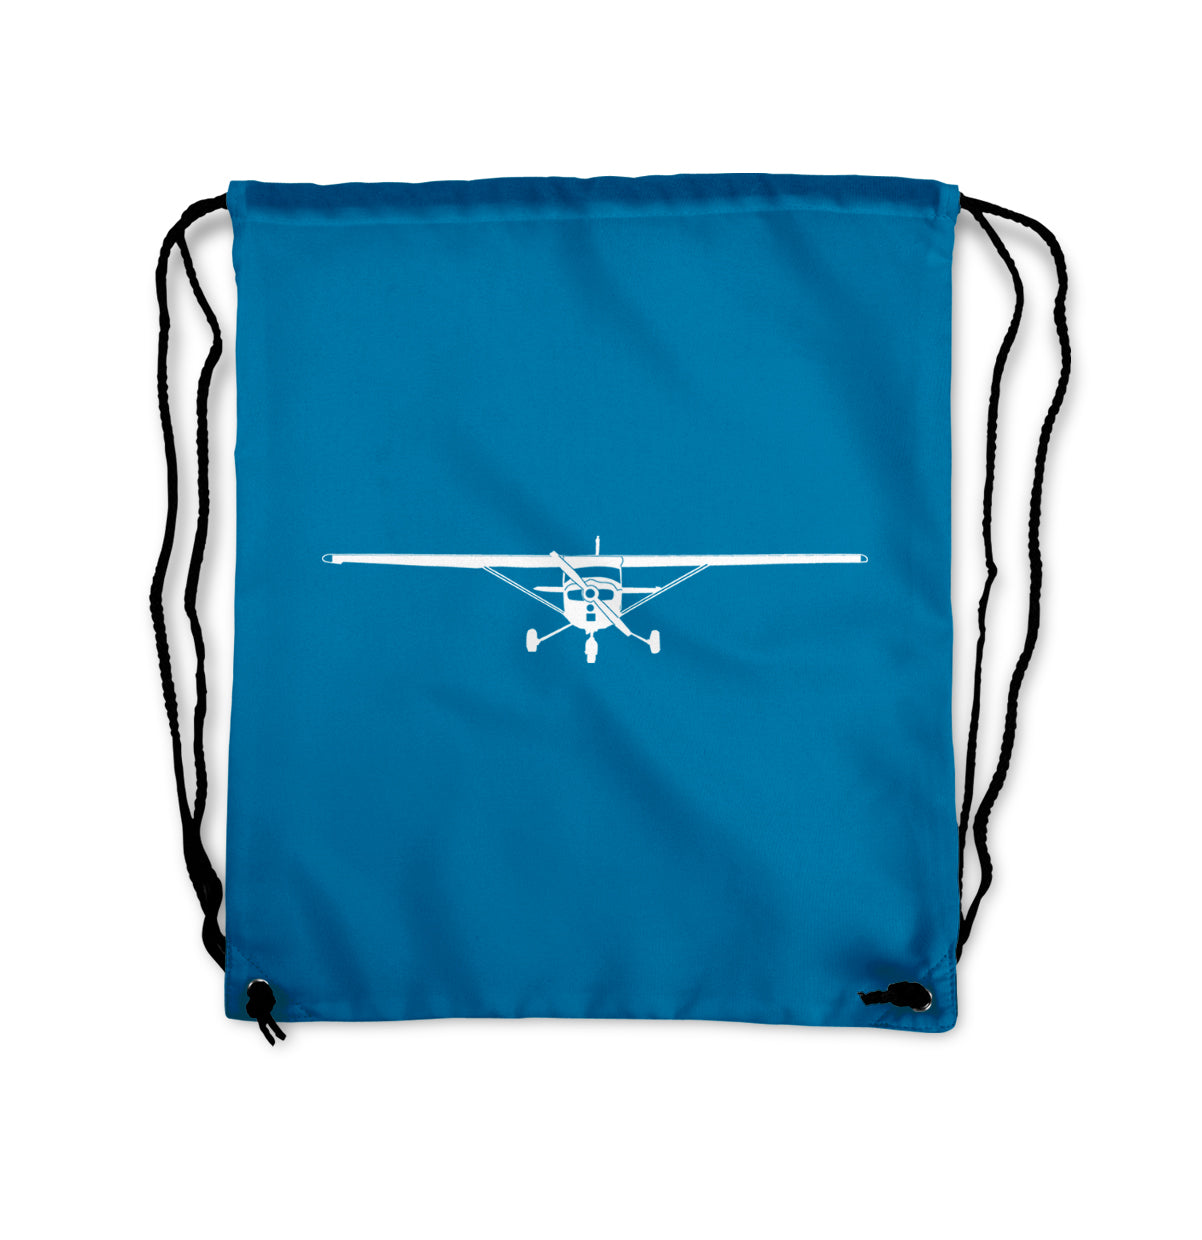 Cessna 172 Silhouette Designed Drawstring Bags